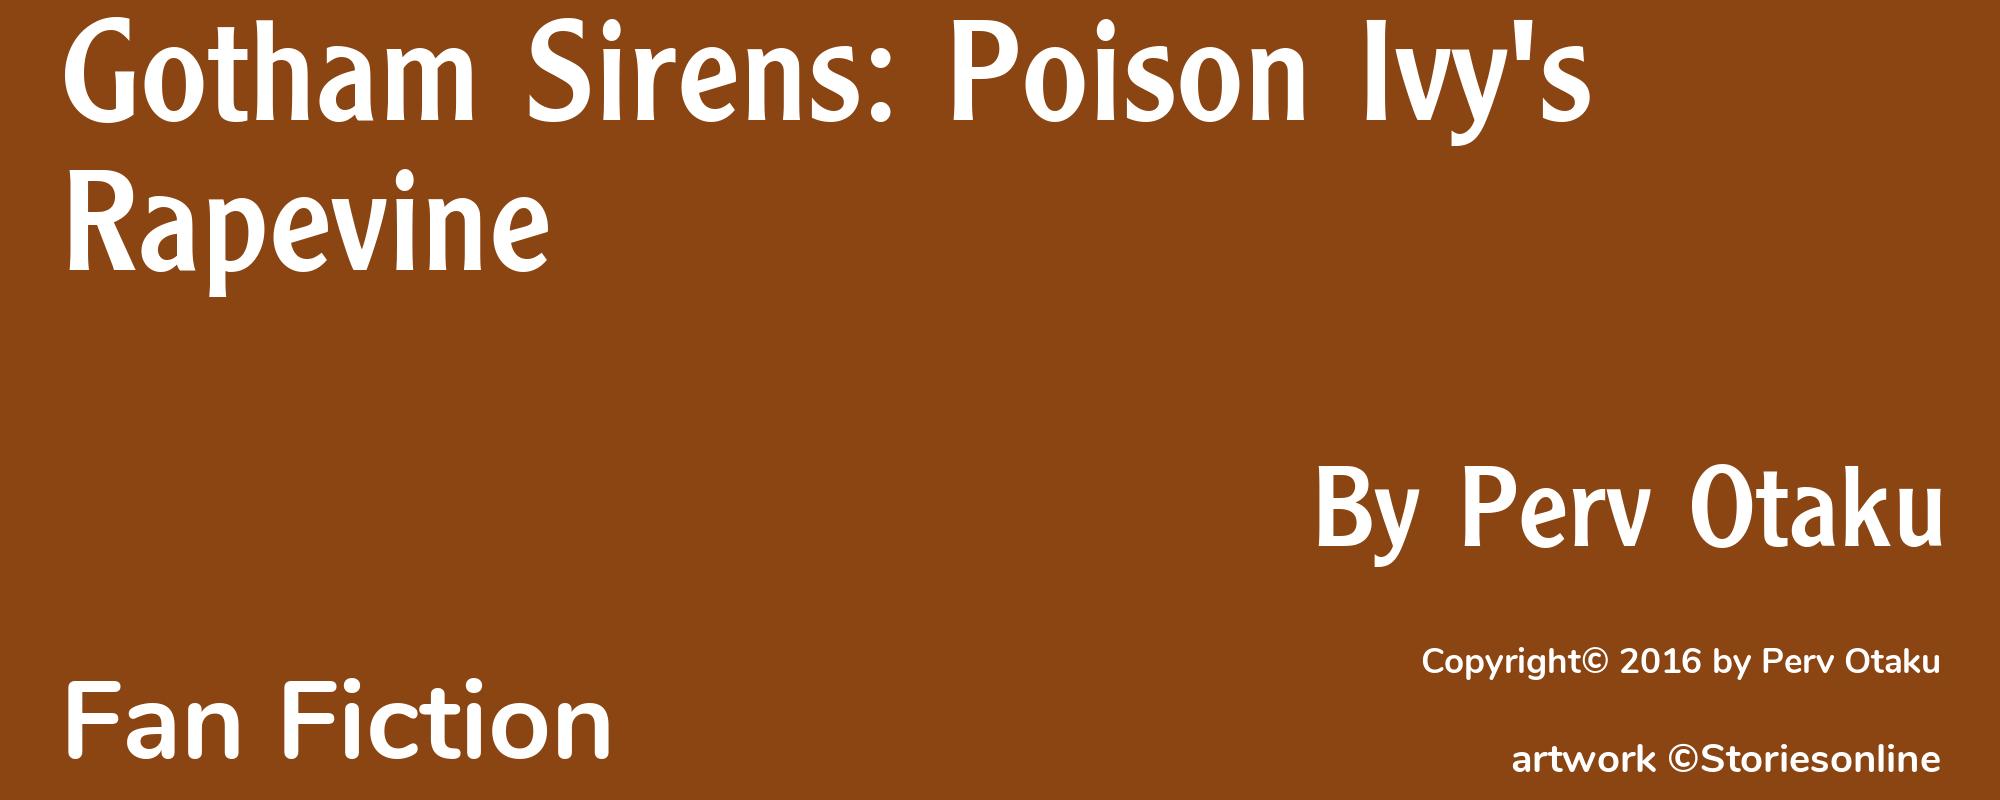 Gotham Sirens: Poison Ivy's Rapevine - Cover